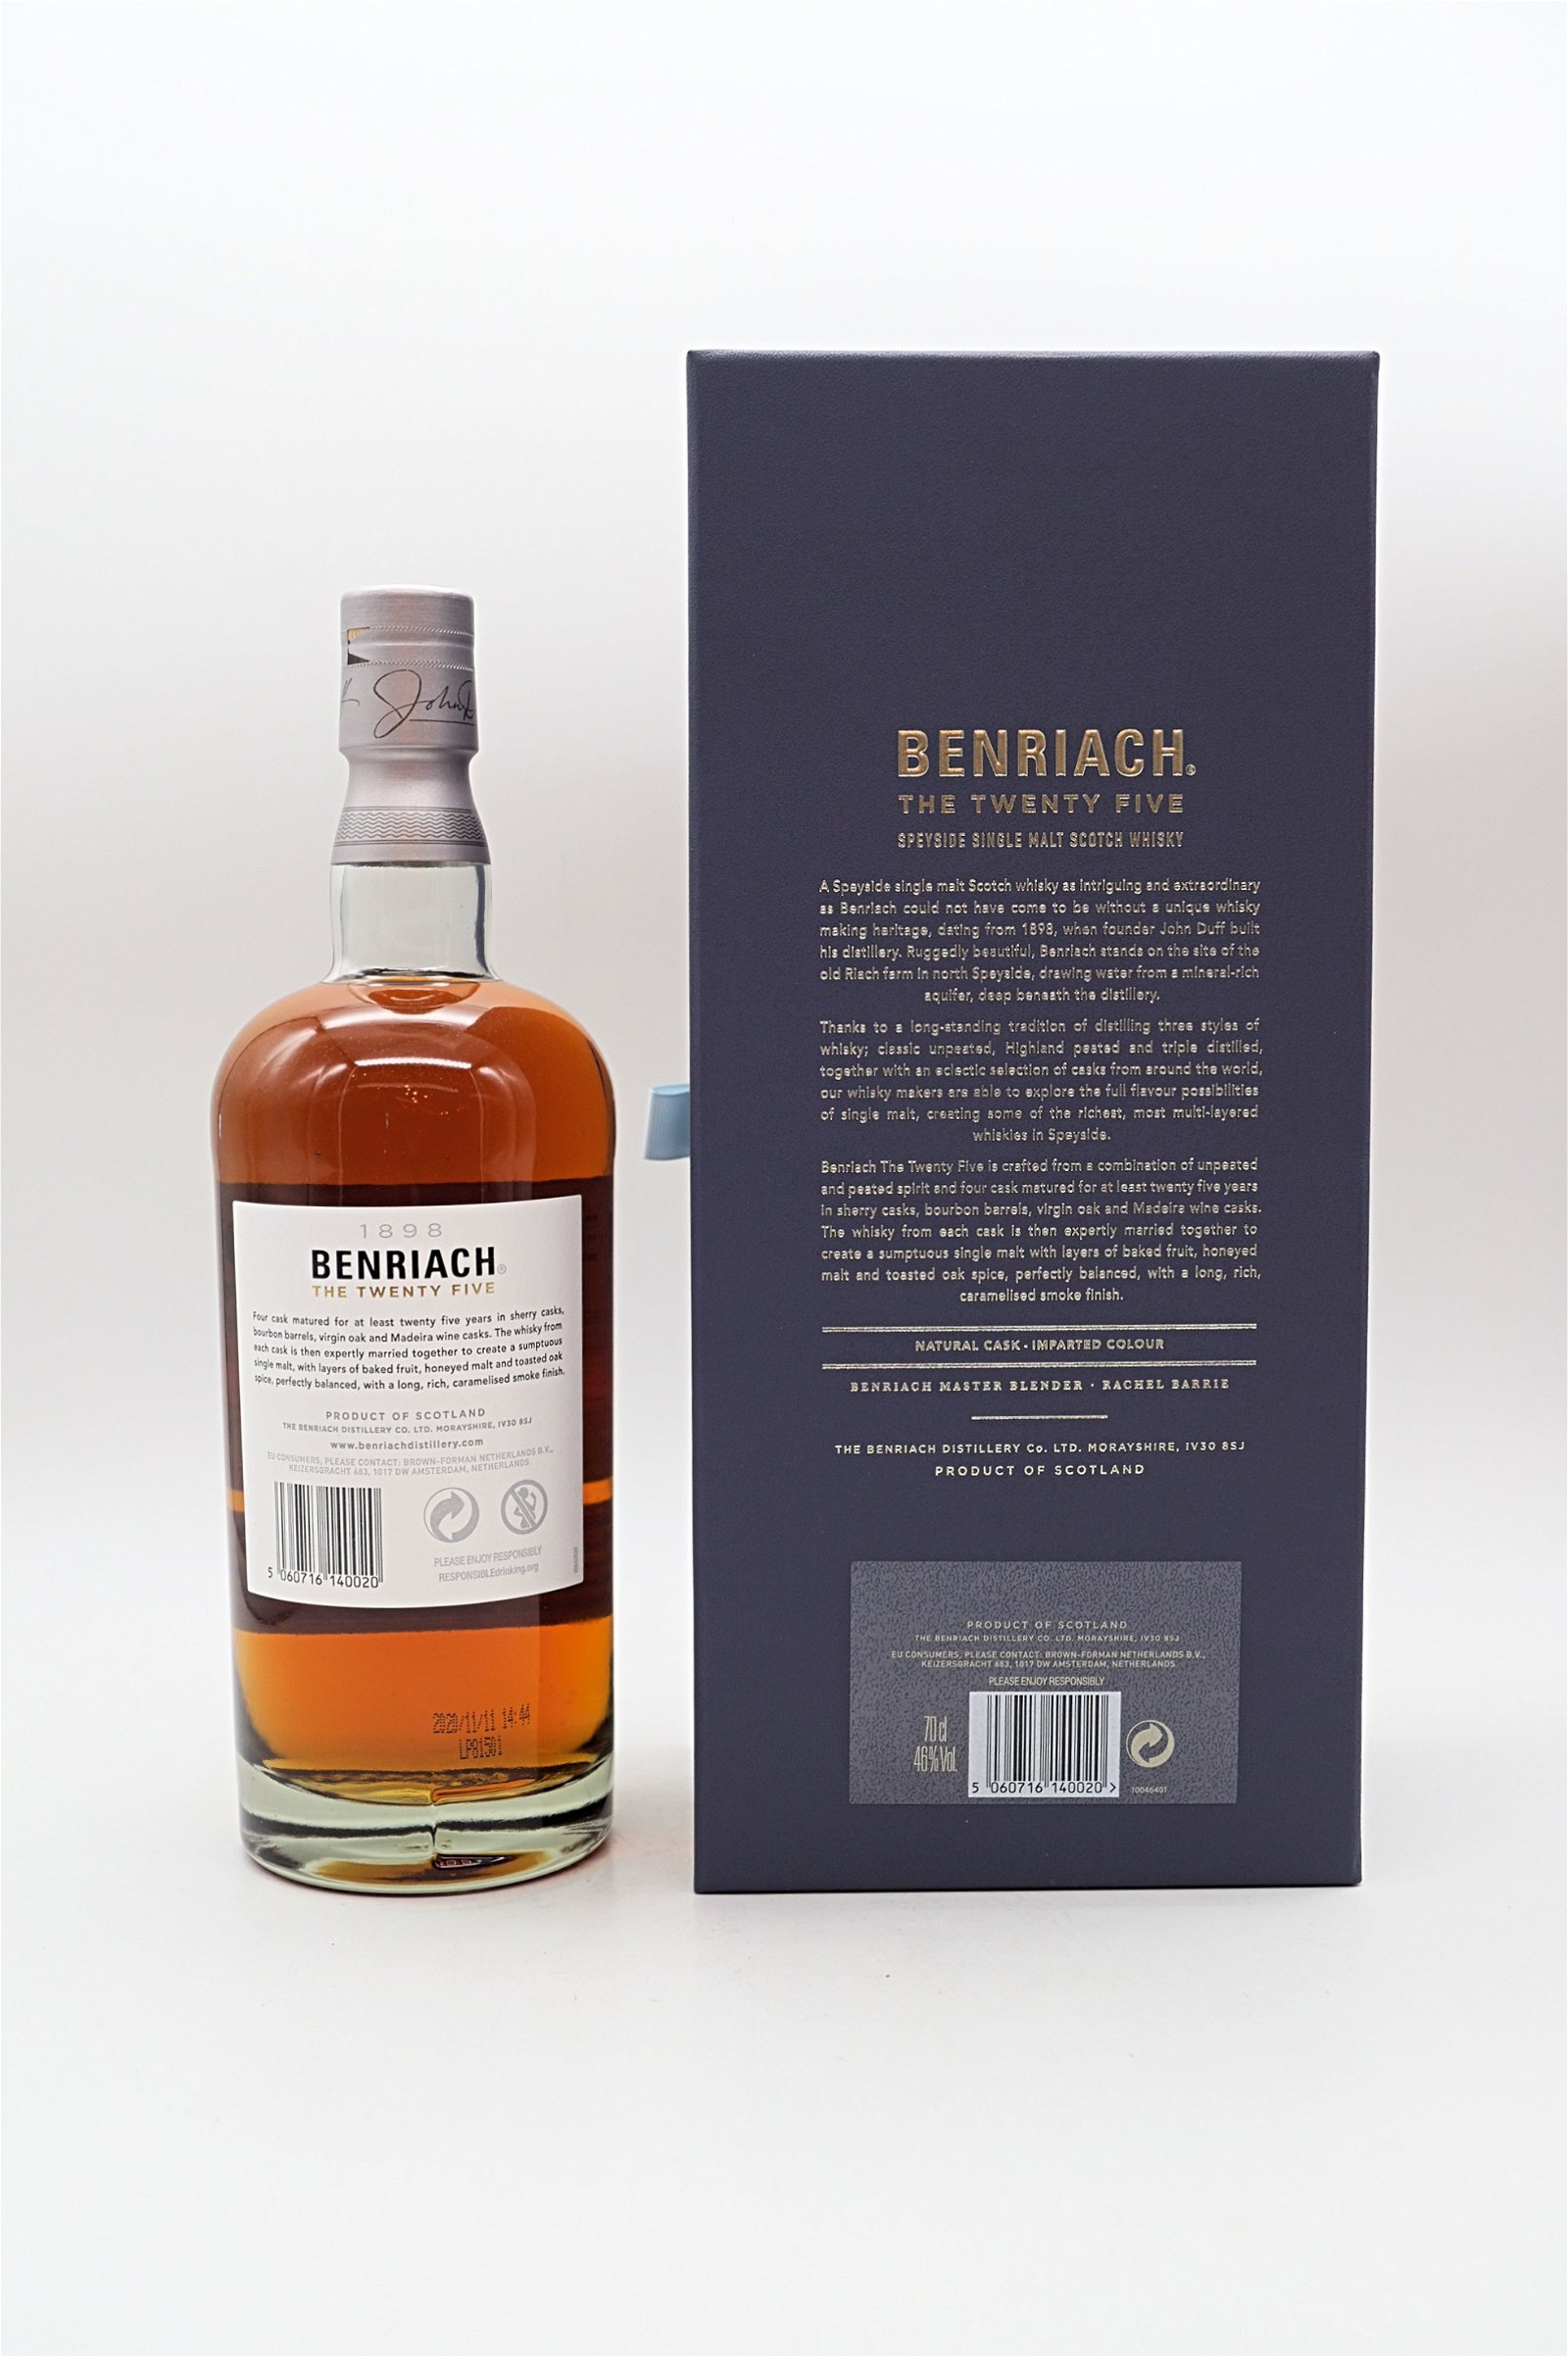 BenRiach The Twenty Five Four Cask Matured Speyside Single Malt Scotch Whisky